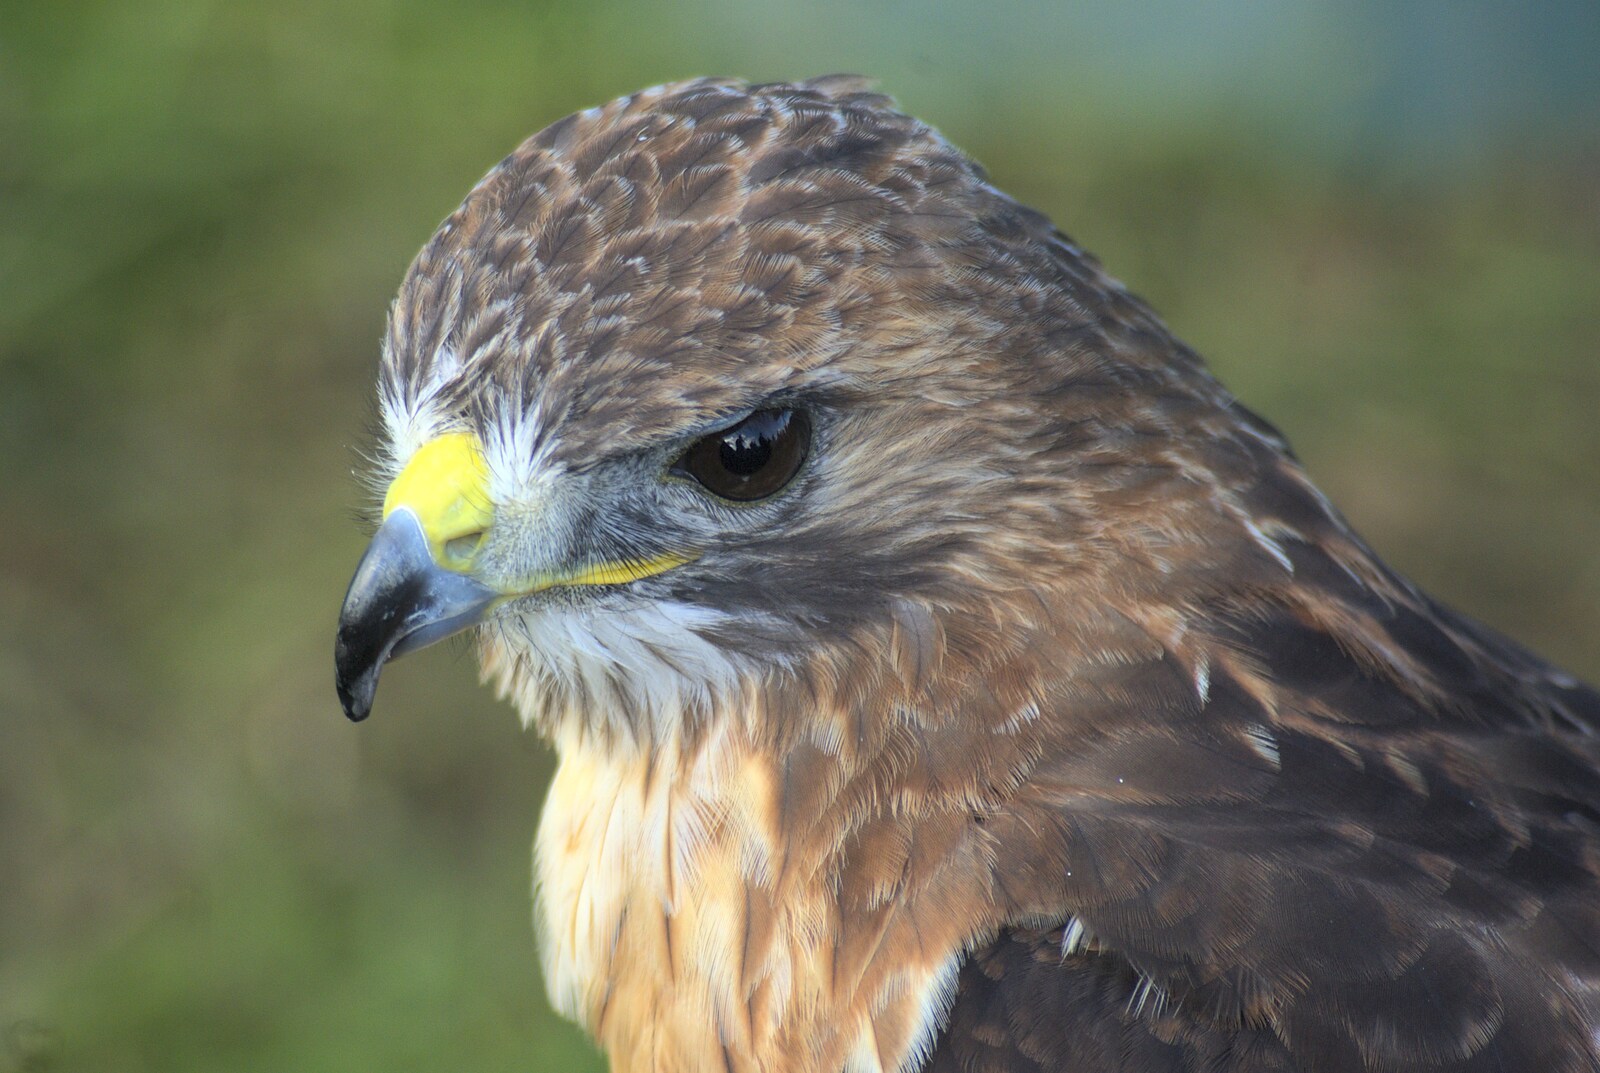 The Eye Show, Palgrave, Suffolk - 30th August 2010: A close-up hawk